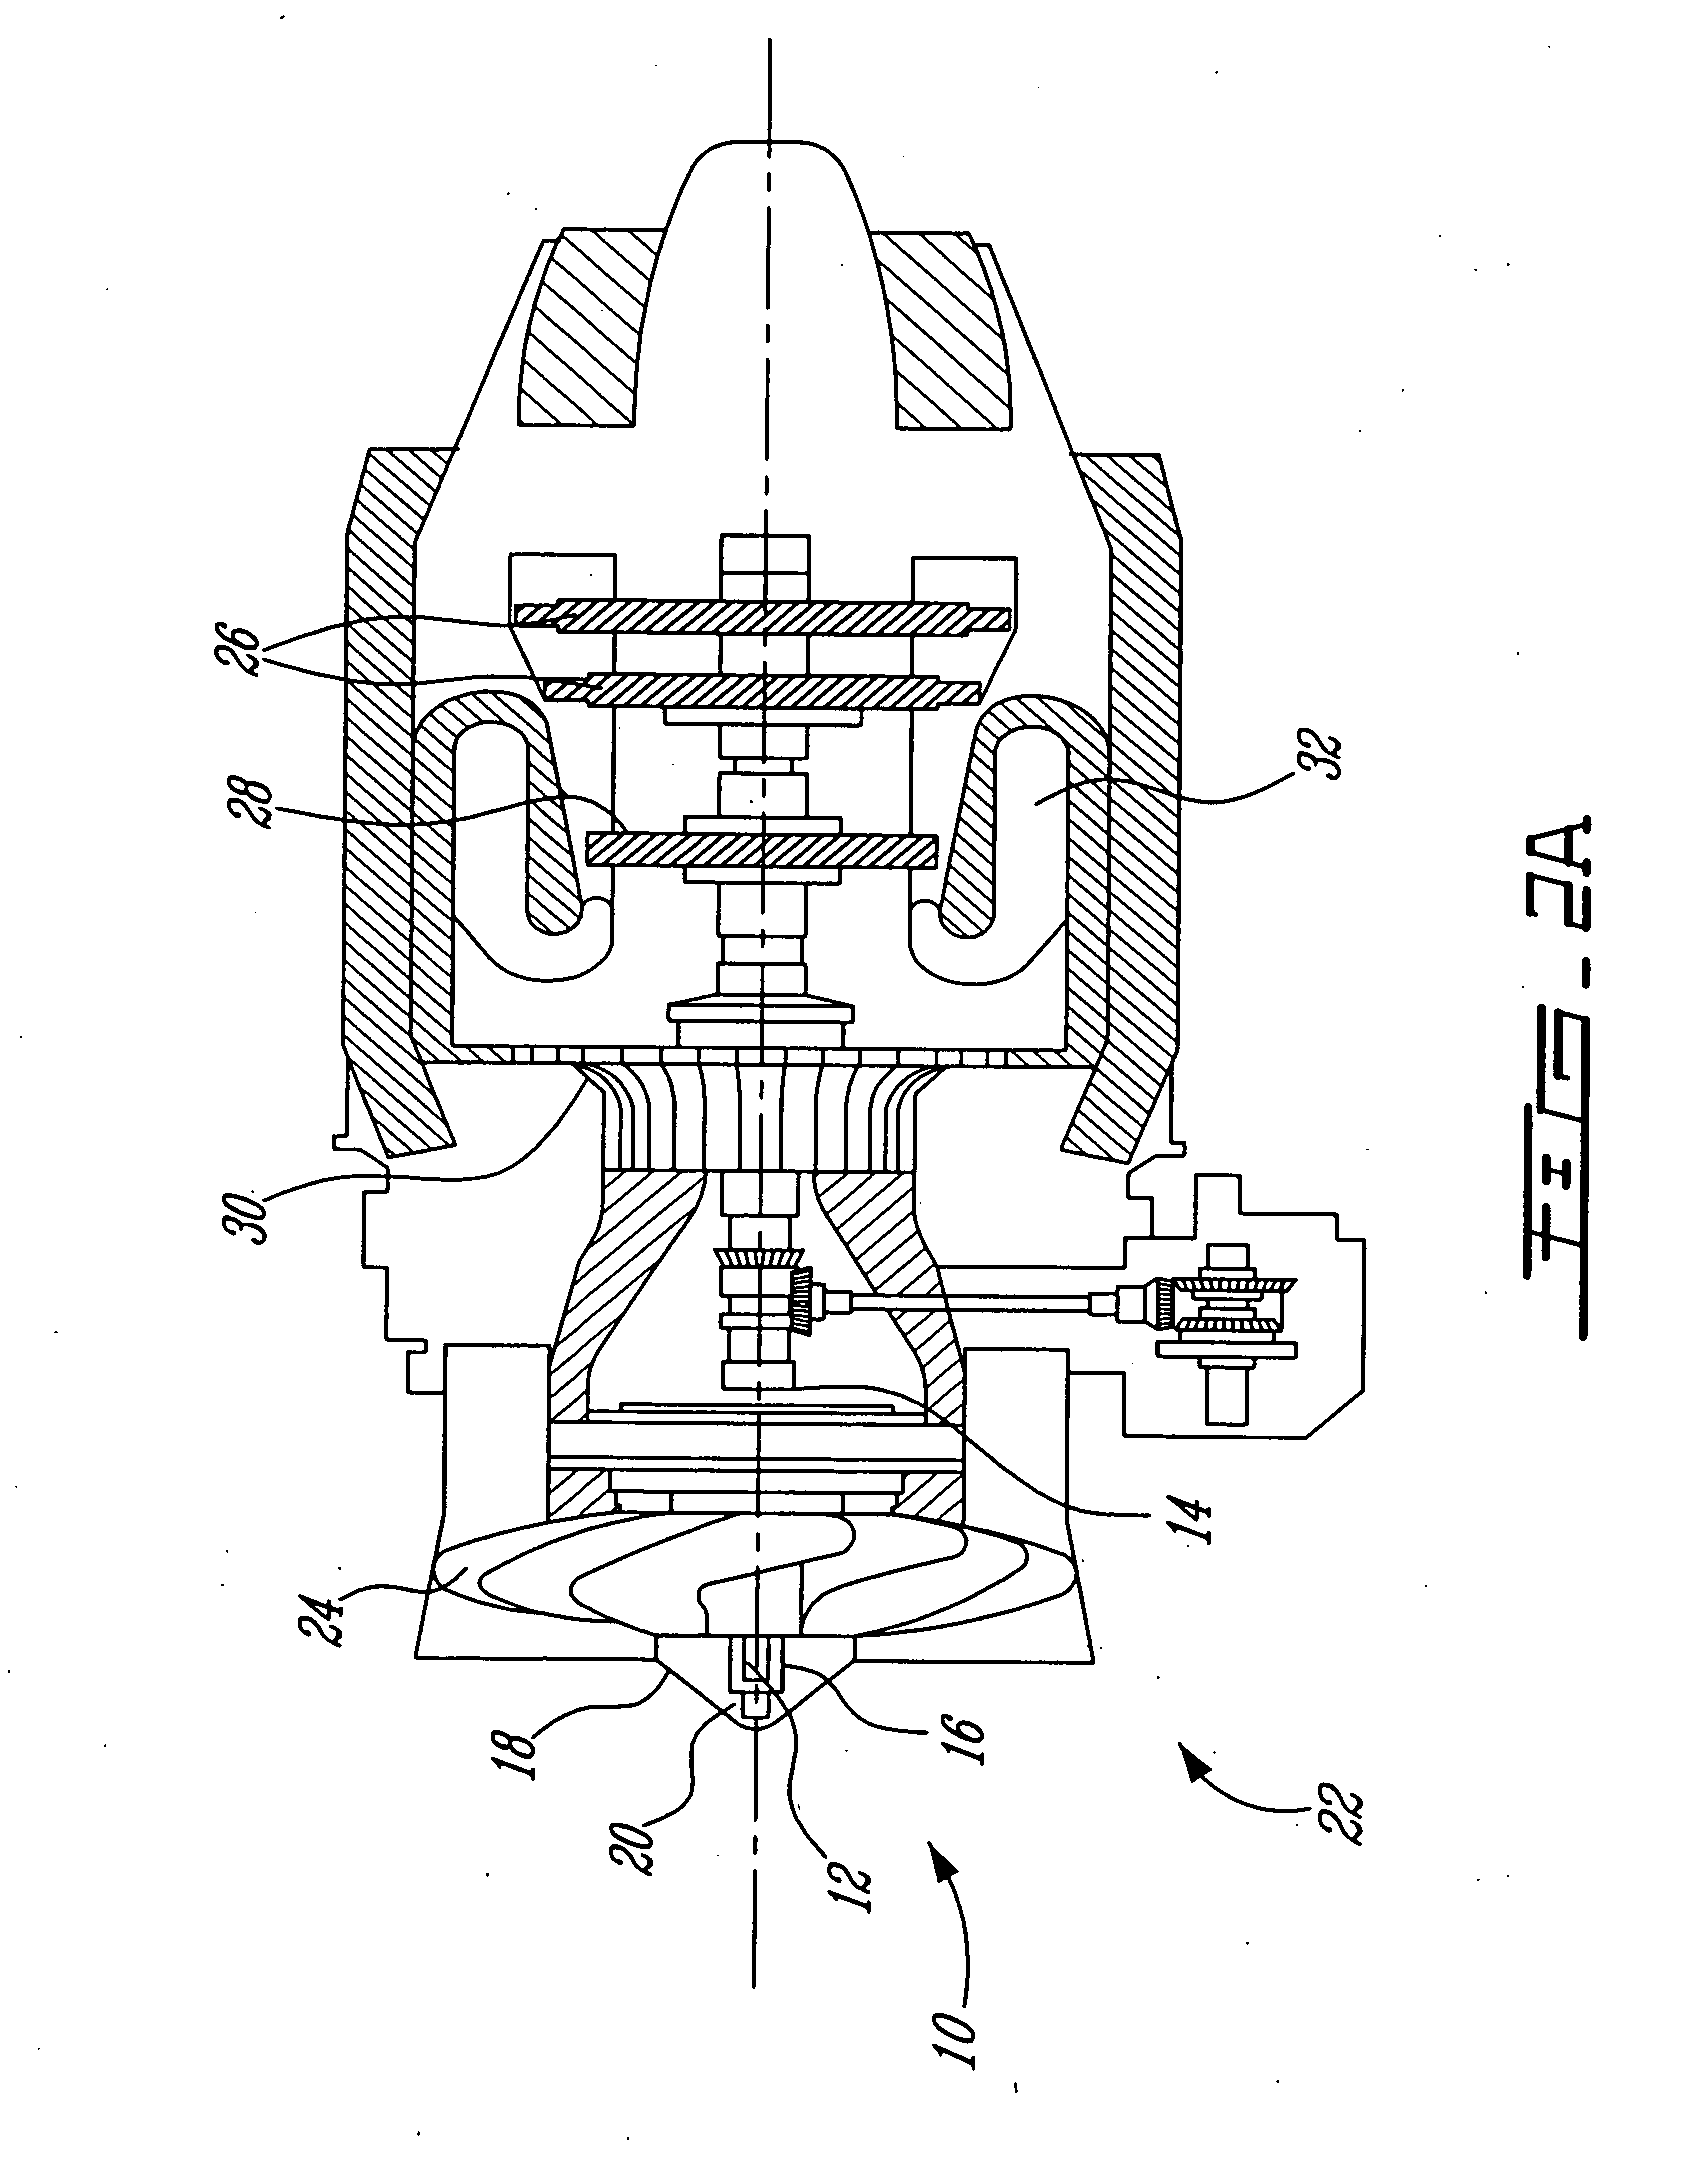 Anti-icing apparatus and method for aero-engine nose cone